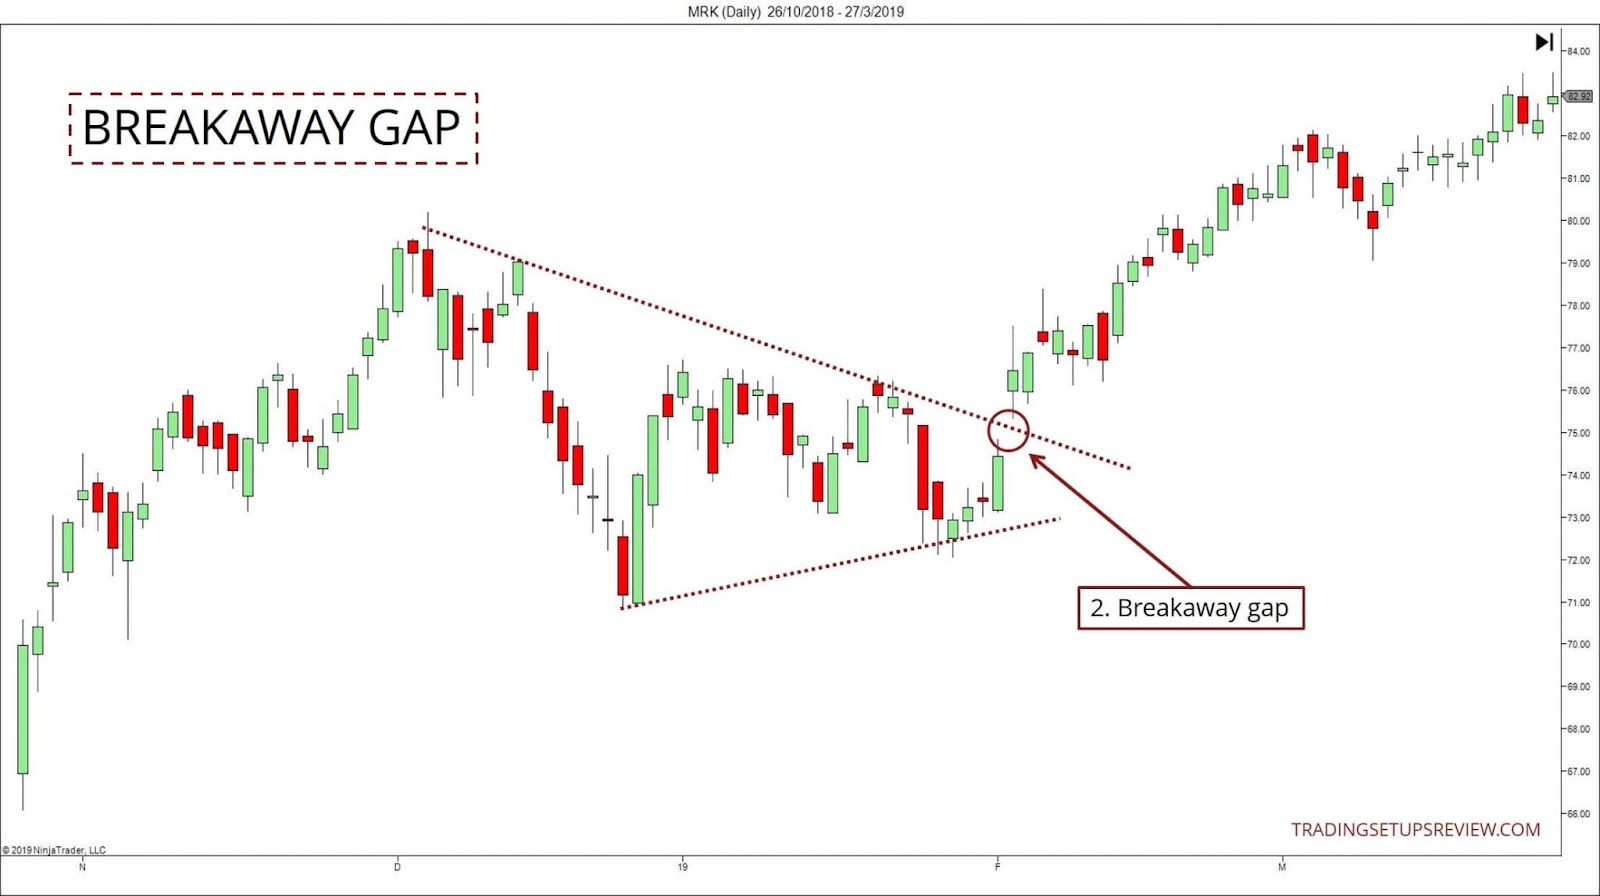 Breakaway Gap (Gap phá vỡ)